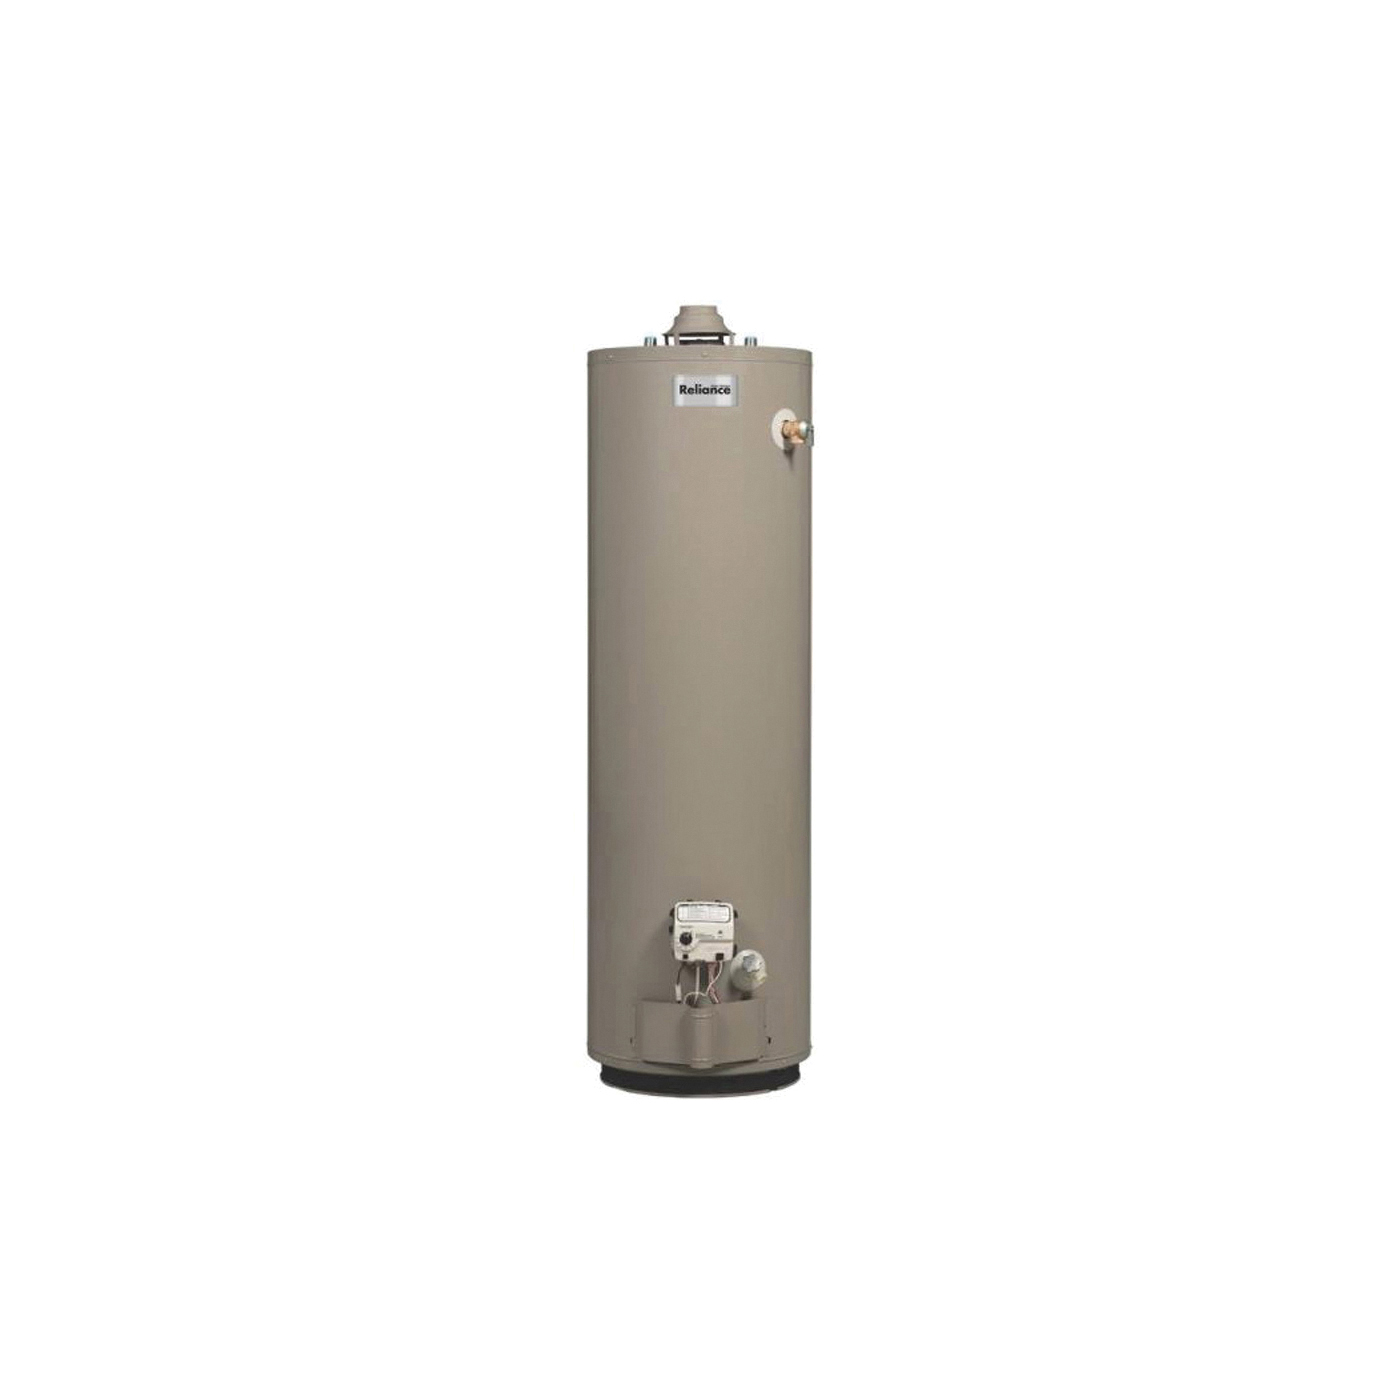 6 40 POCT Gas Water Heater, Propane, 40 gal Tank, 65 gph, 35500 Btu BTU, 0.66 Energy Efficiency